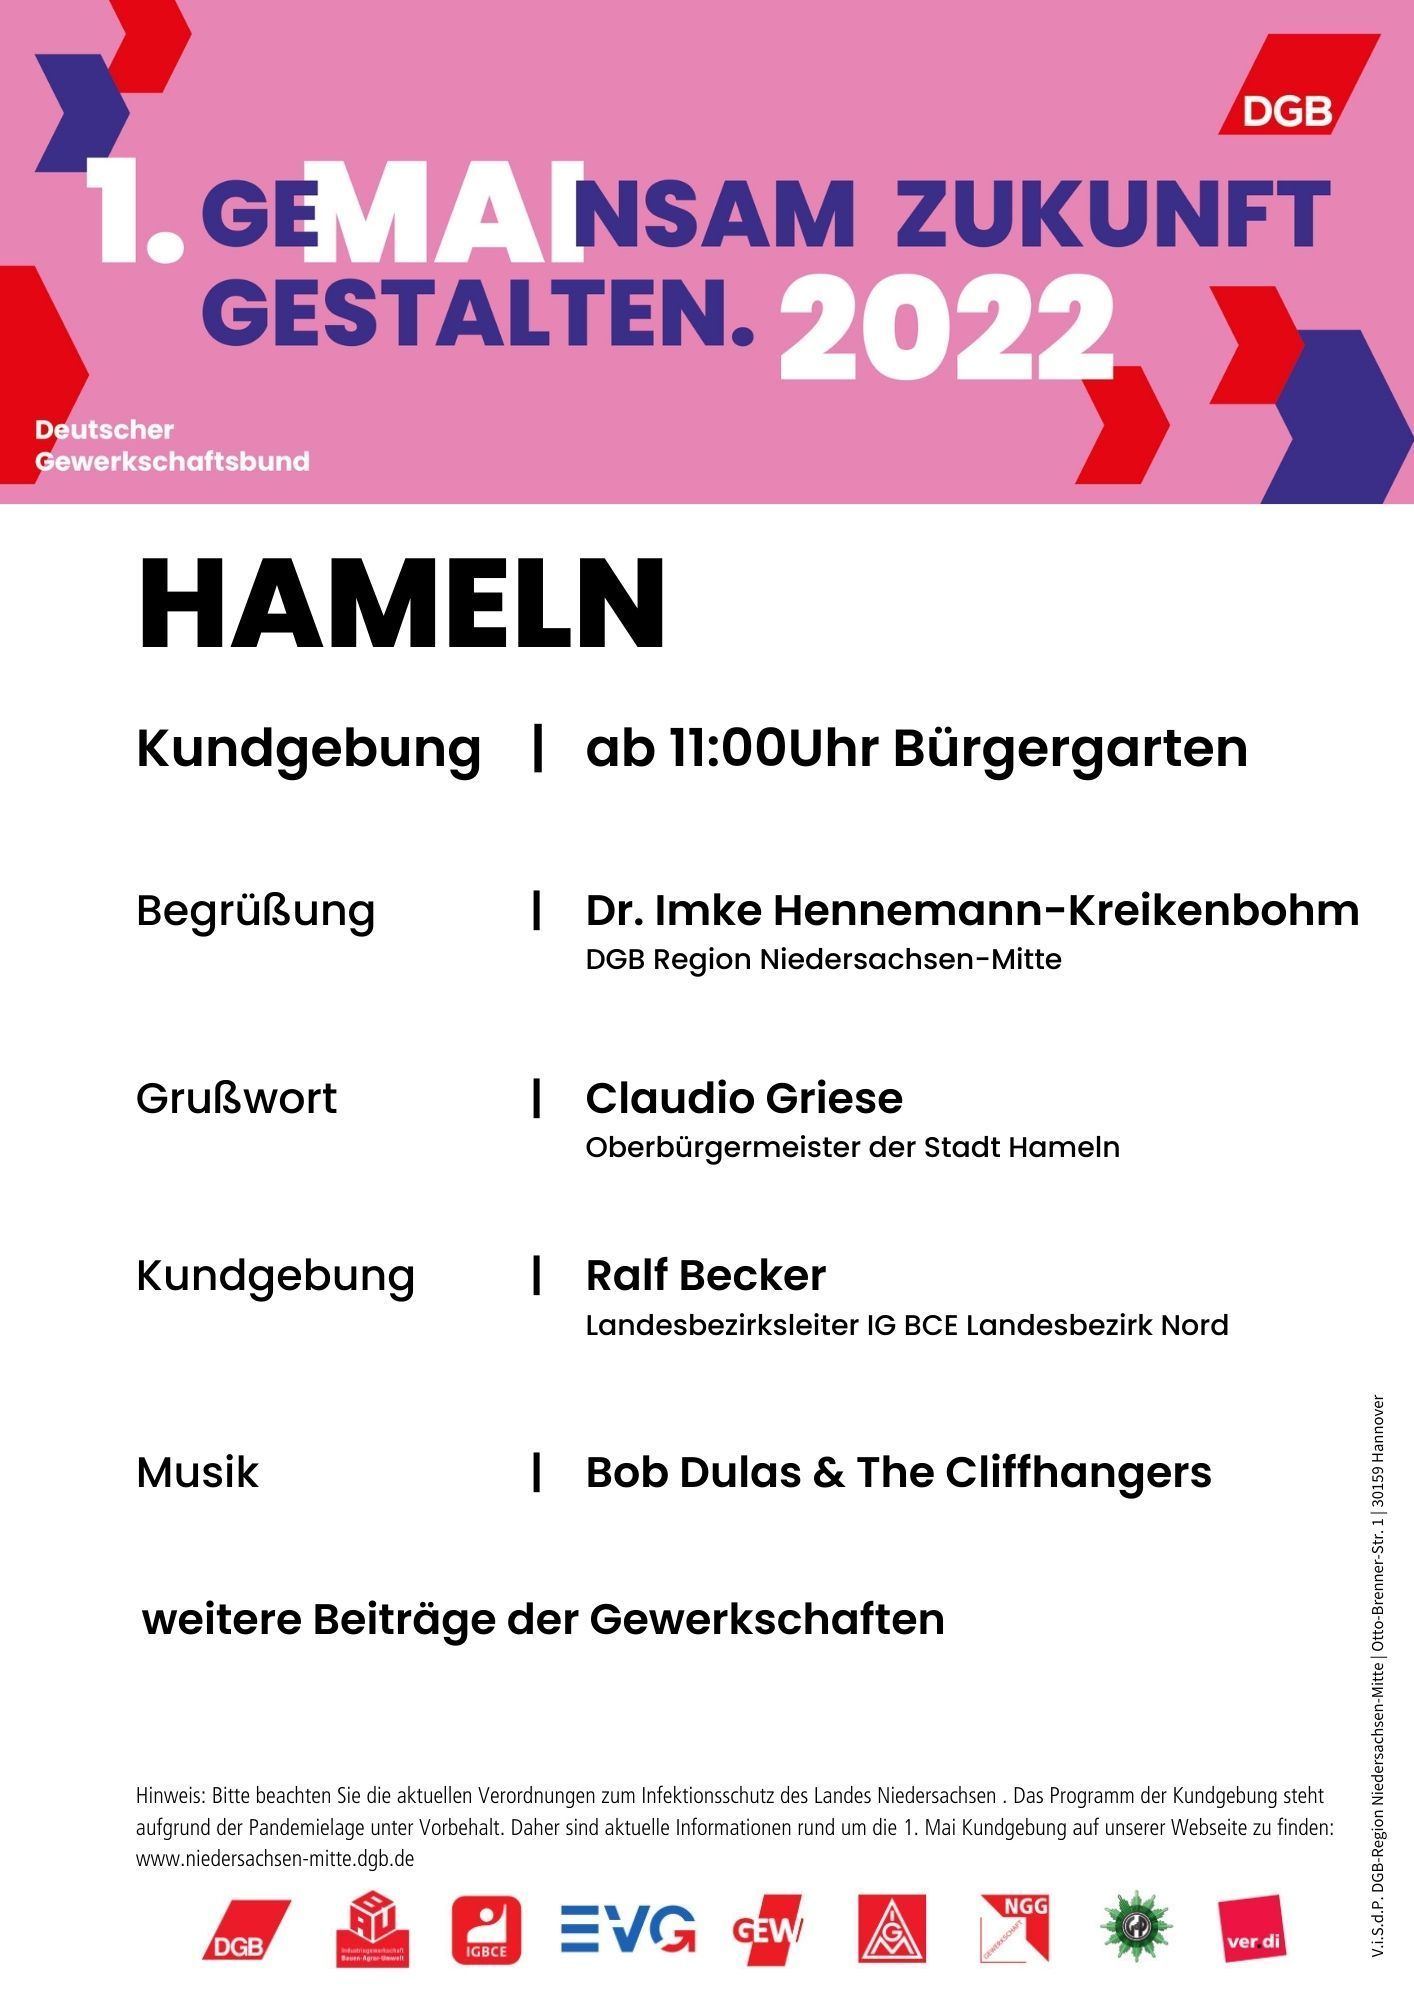 DGB Kundgebung in Hameln